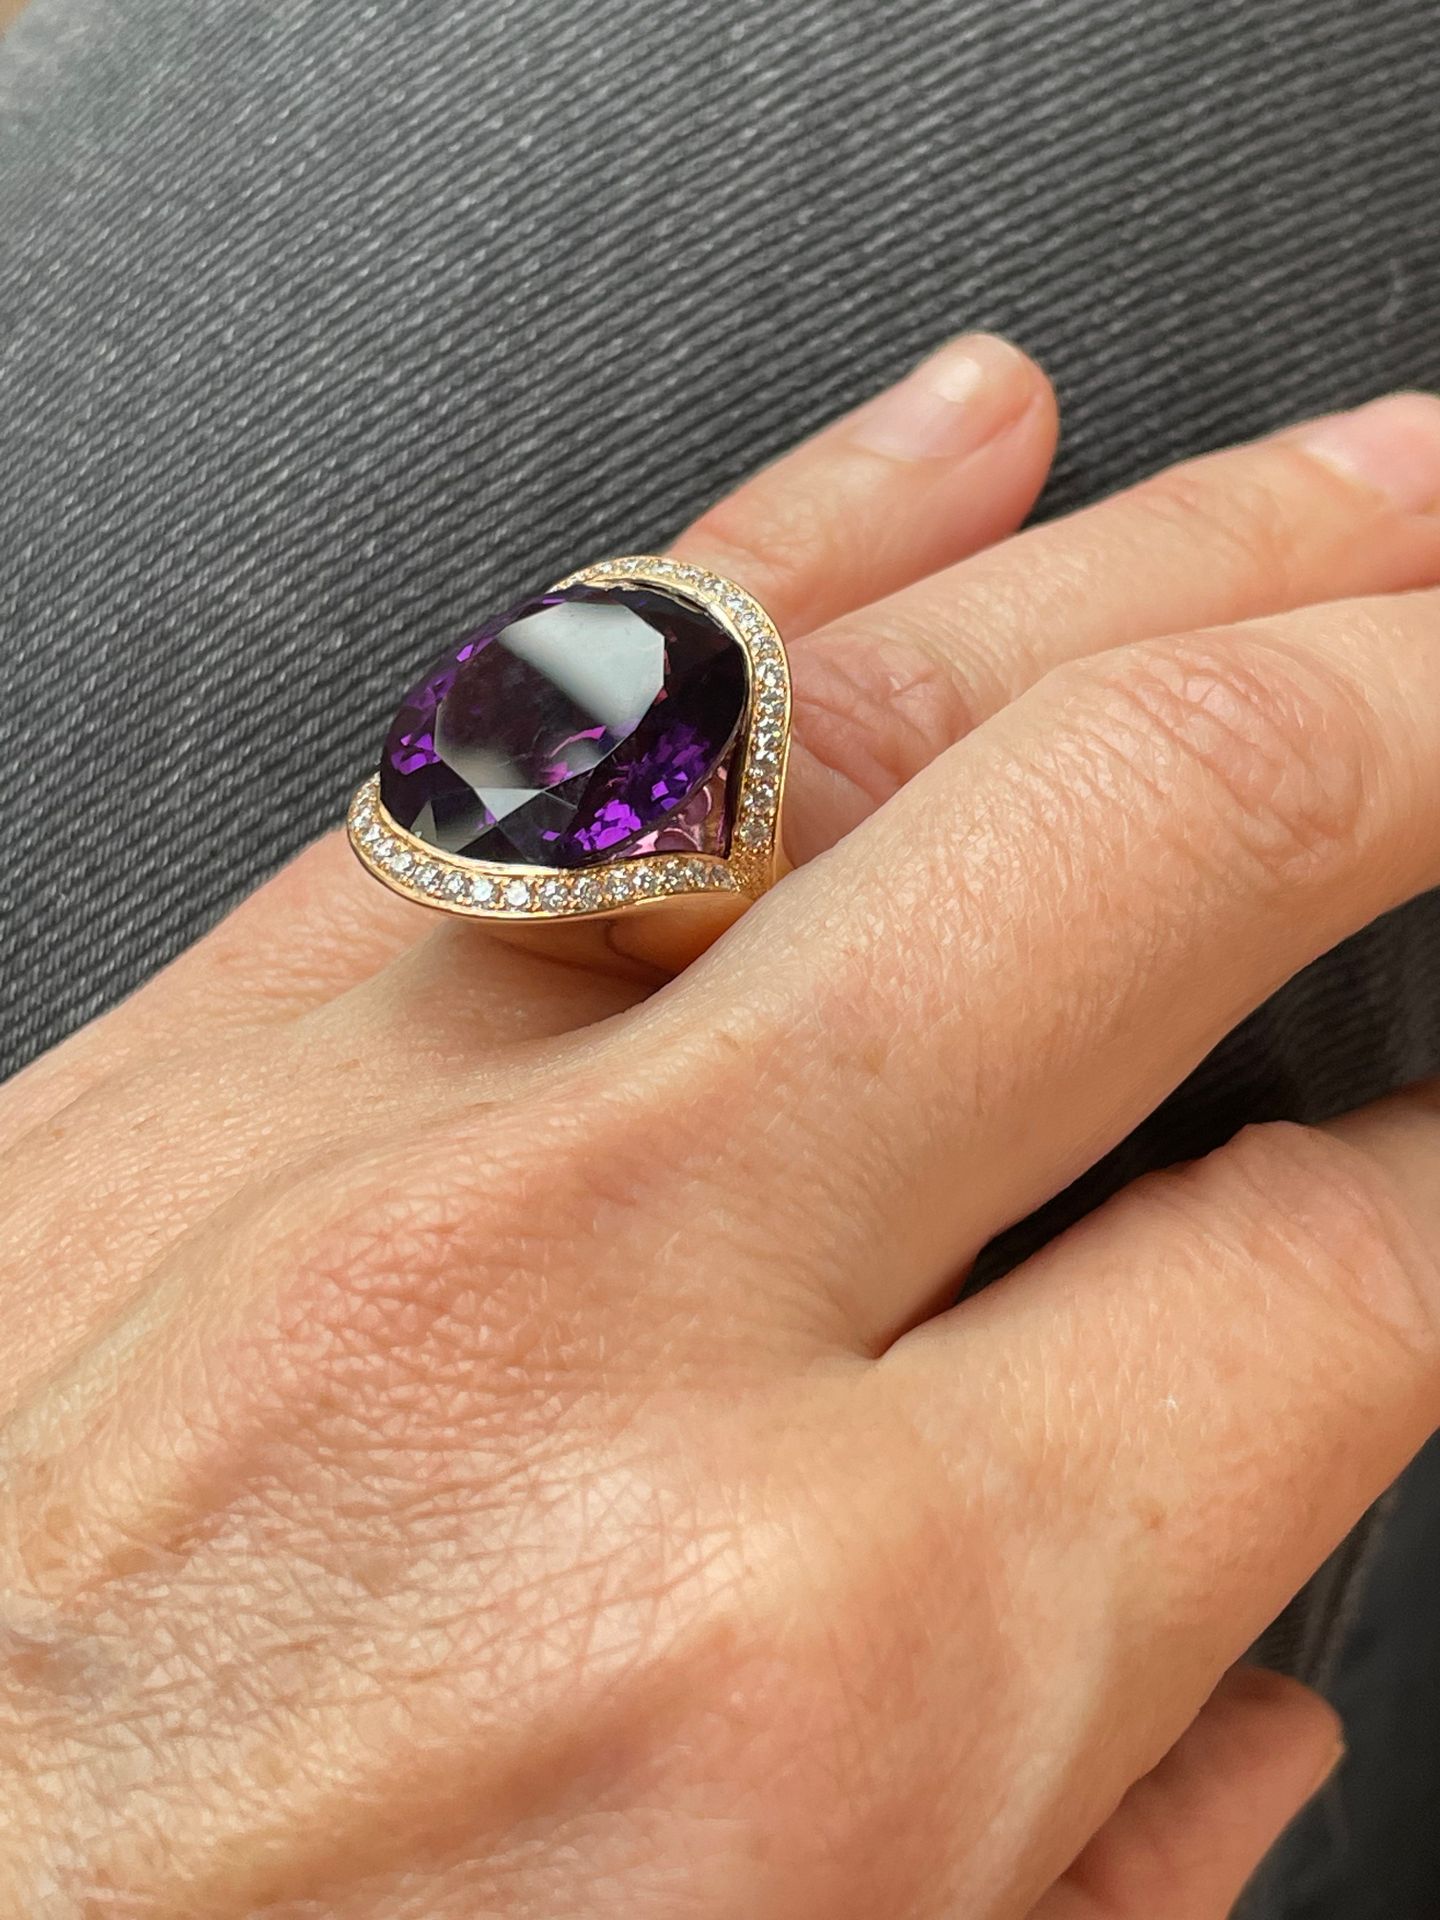 Null LEA CASTIEL
18K（750°/00）玫瑰金戒指，以大型椭圆形枕形切割紫水晶为中心，镶嵌两排圆形明亮式切割钻石。戒指内有签名。 
手指尺寸为&hellip;